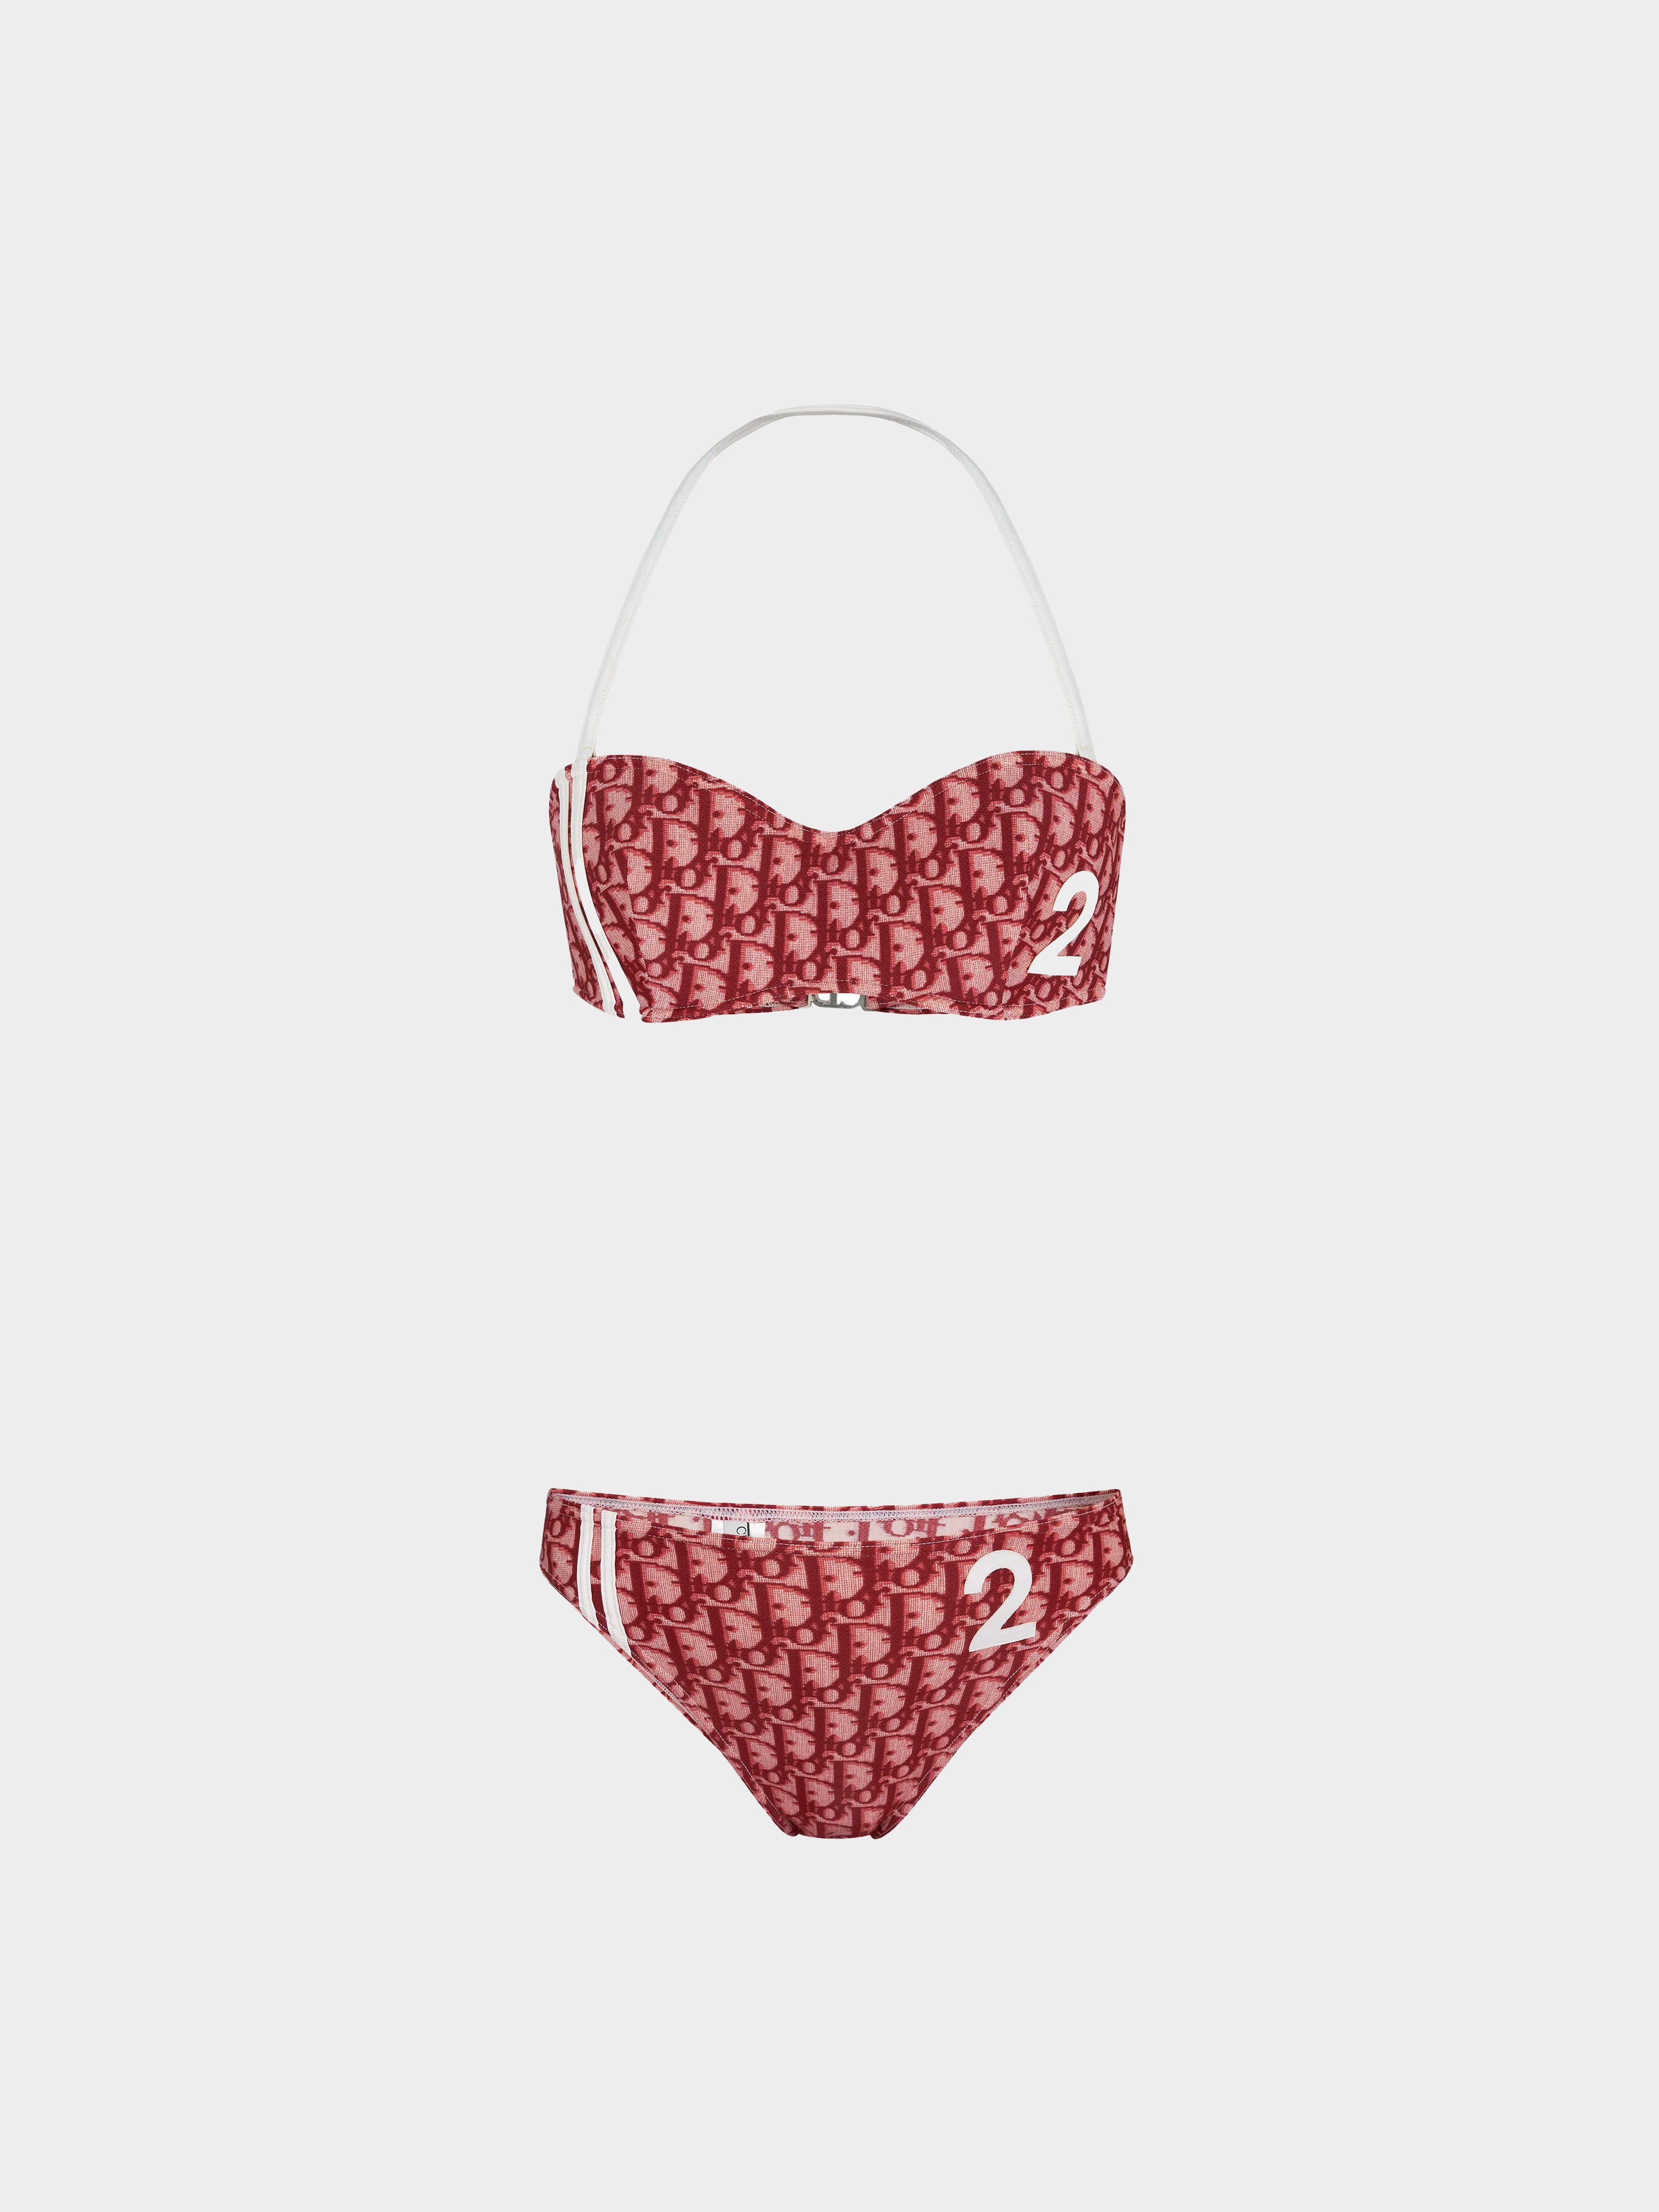 Classic Louis Vuitton bikini monogram print with the